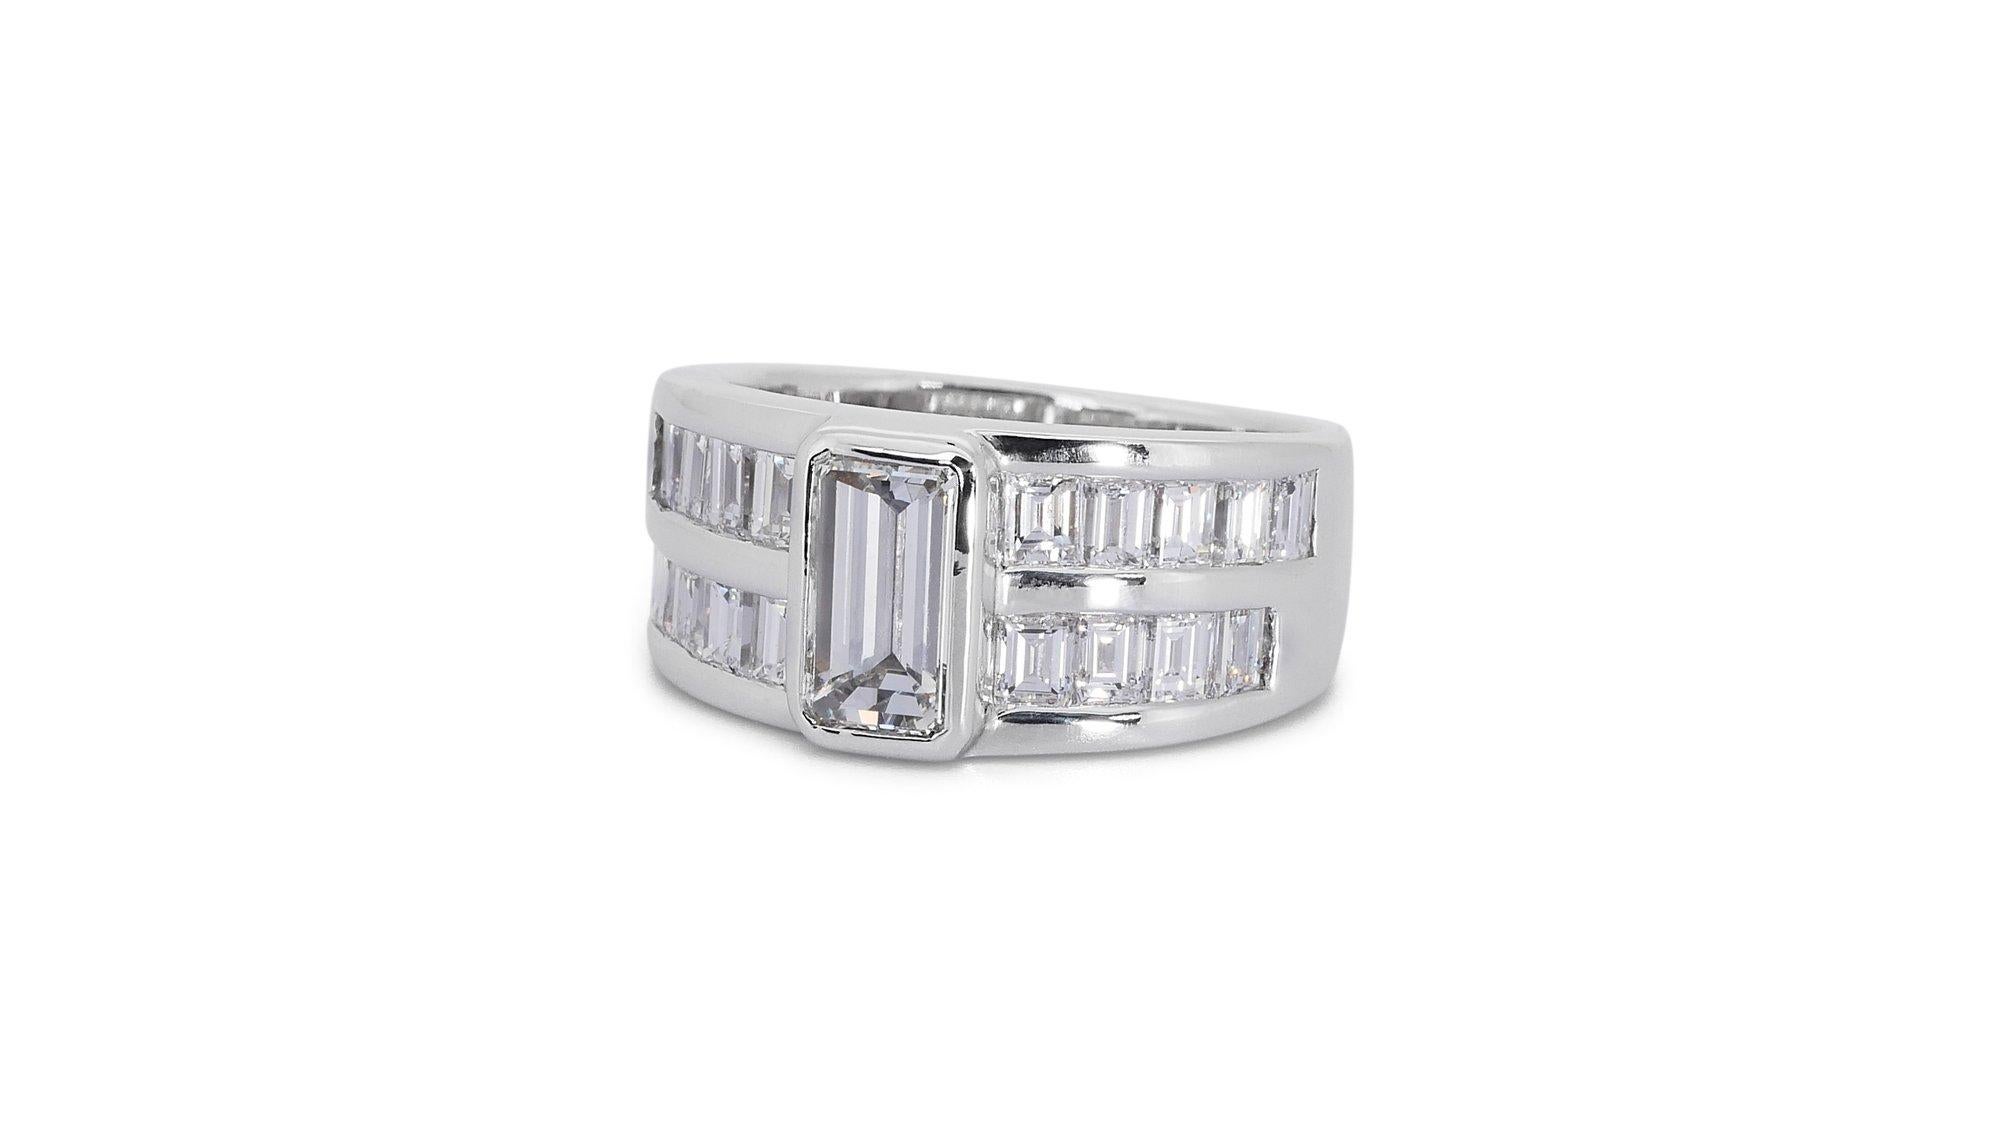 Glamorous 18K White Gold Dome Ring w/ 1.90 ct Natural Diamonds IGI Certificate For Sale 2